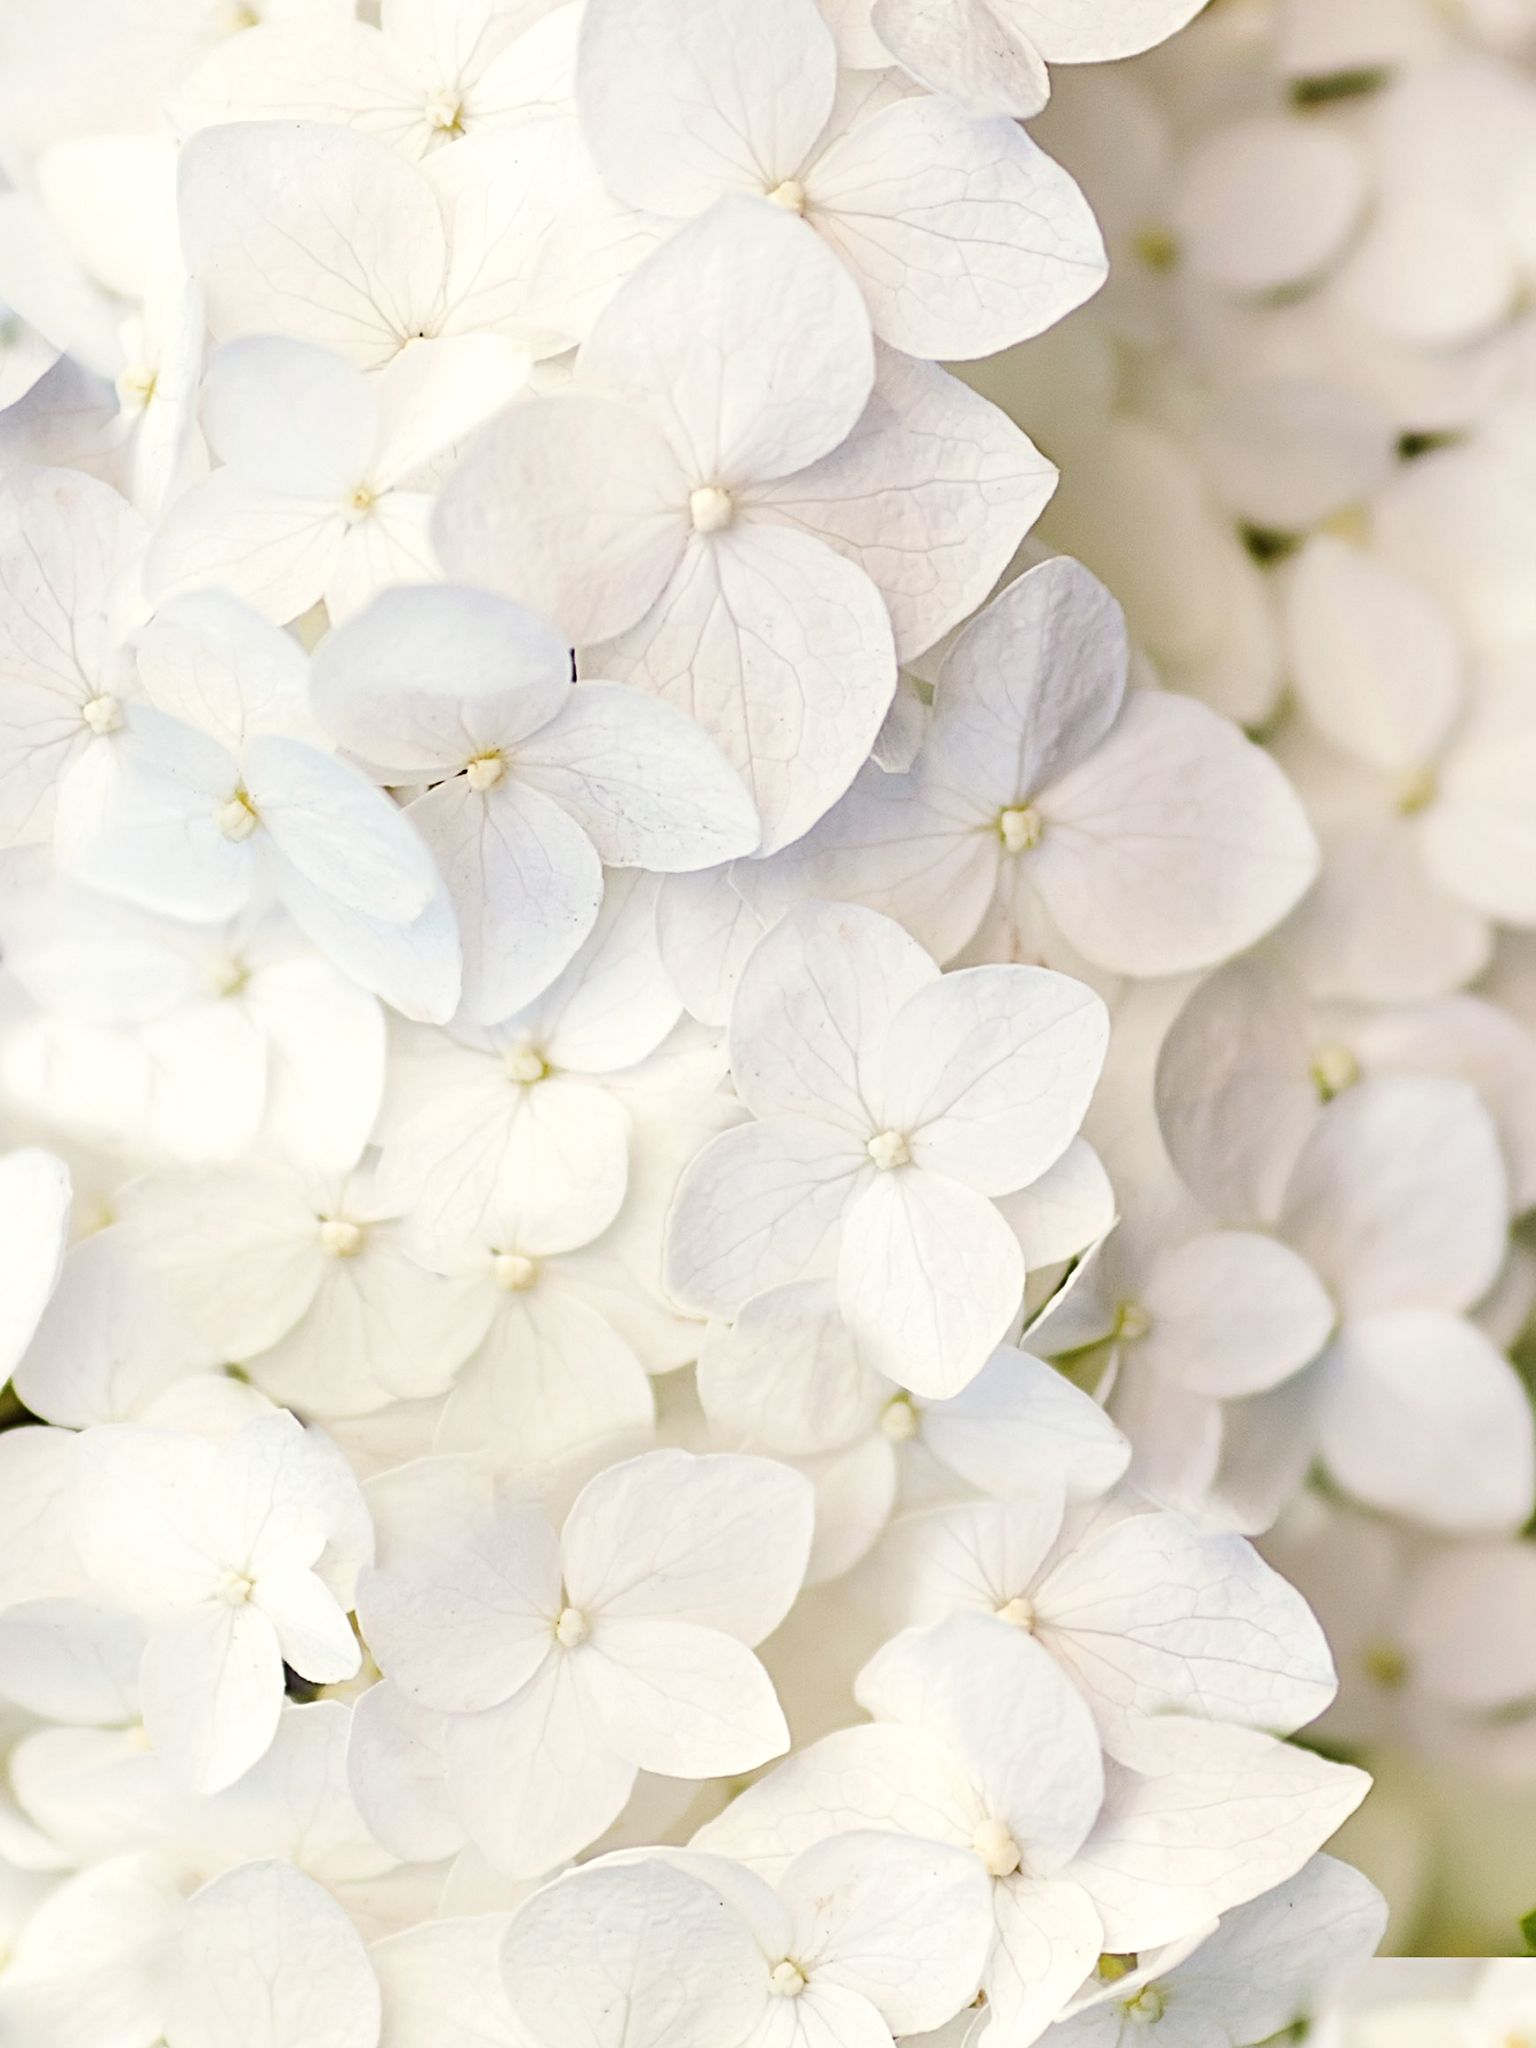 White flowers | WALLPAPER | Pinterest | White flowers, Flowers and ...